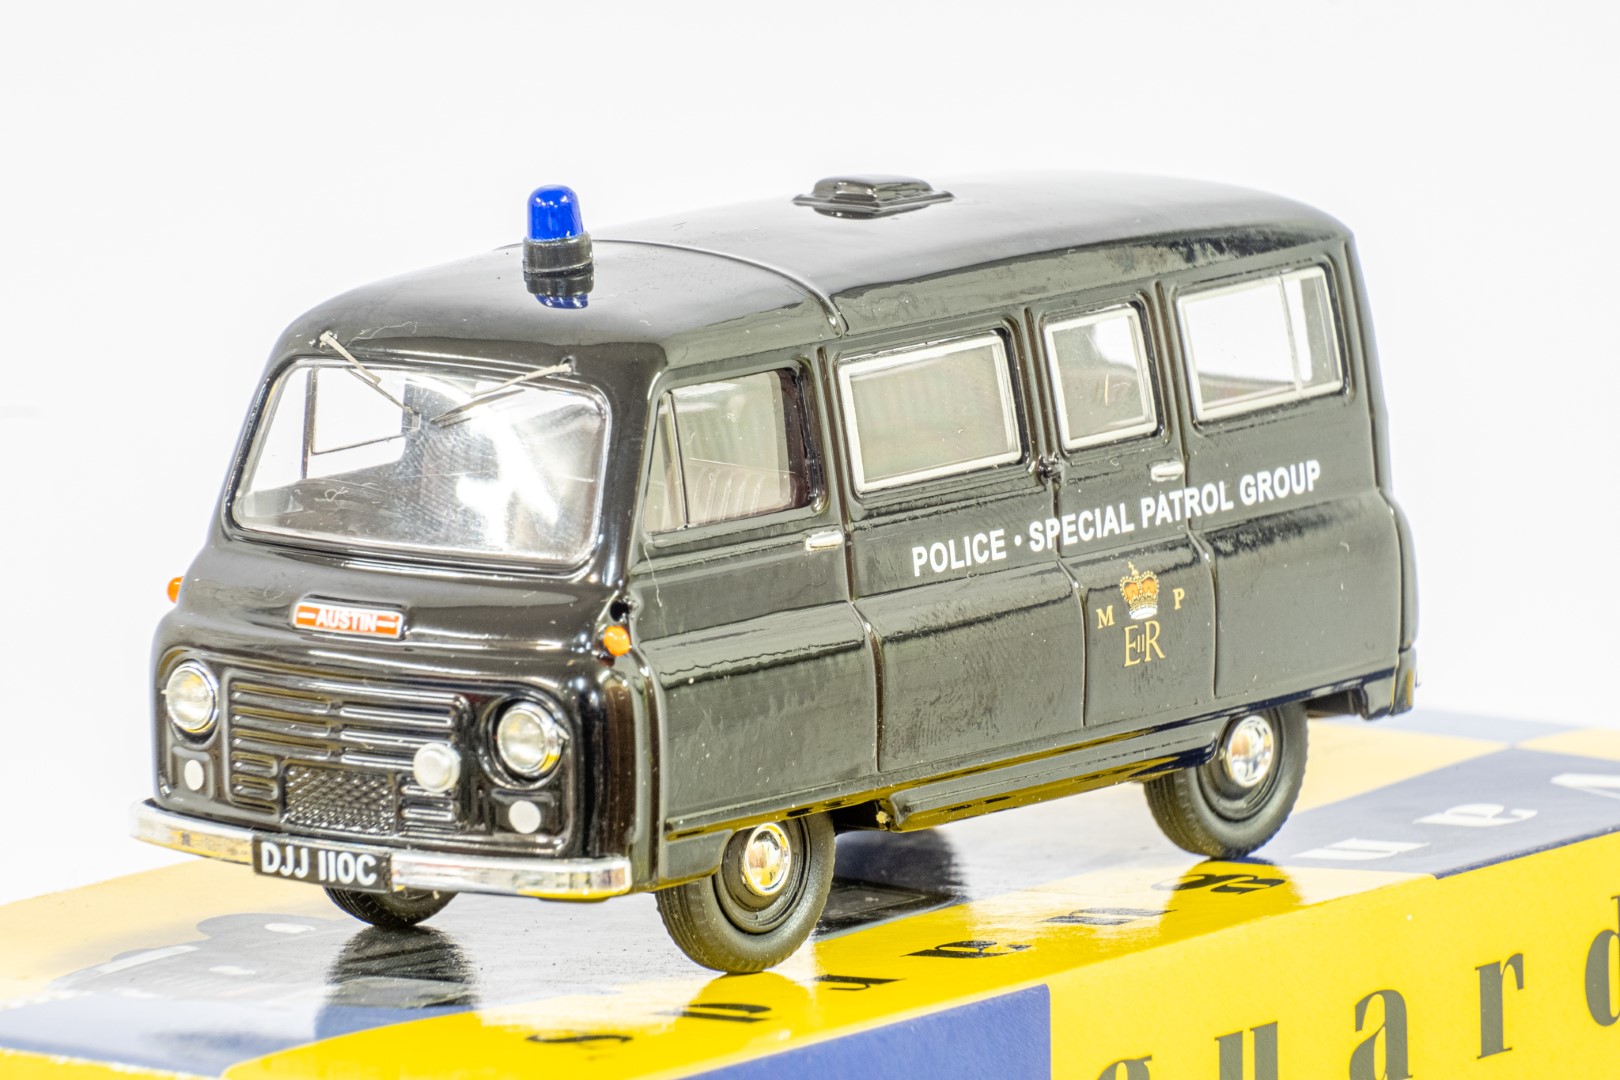 Vanguards Morris J2 Minibus - Metropolitan Police SPG - Image 5 of 6